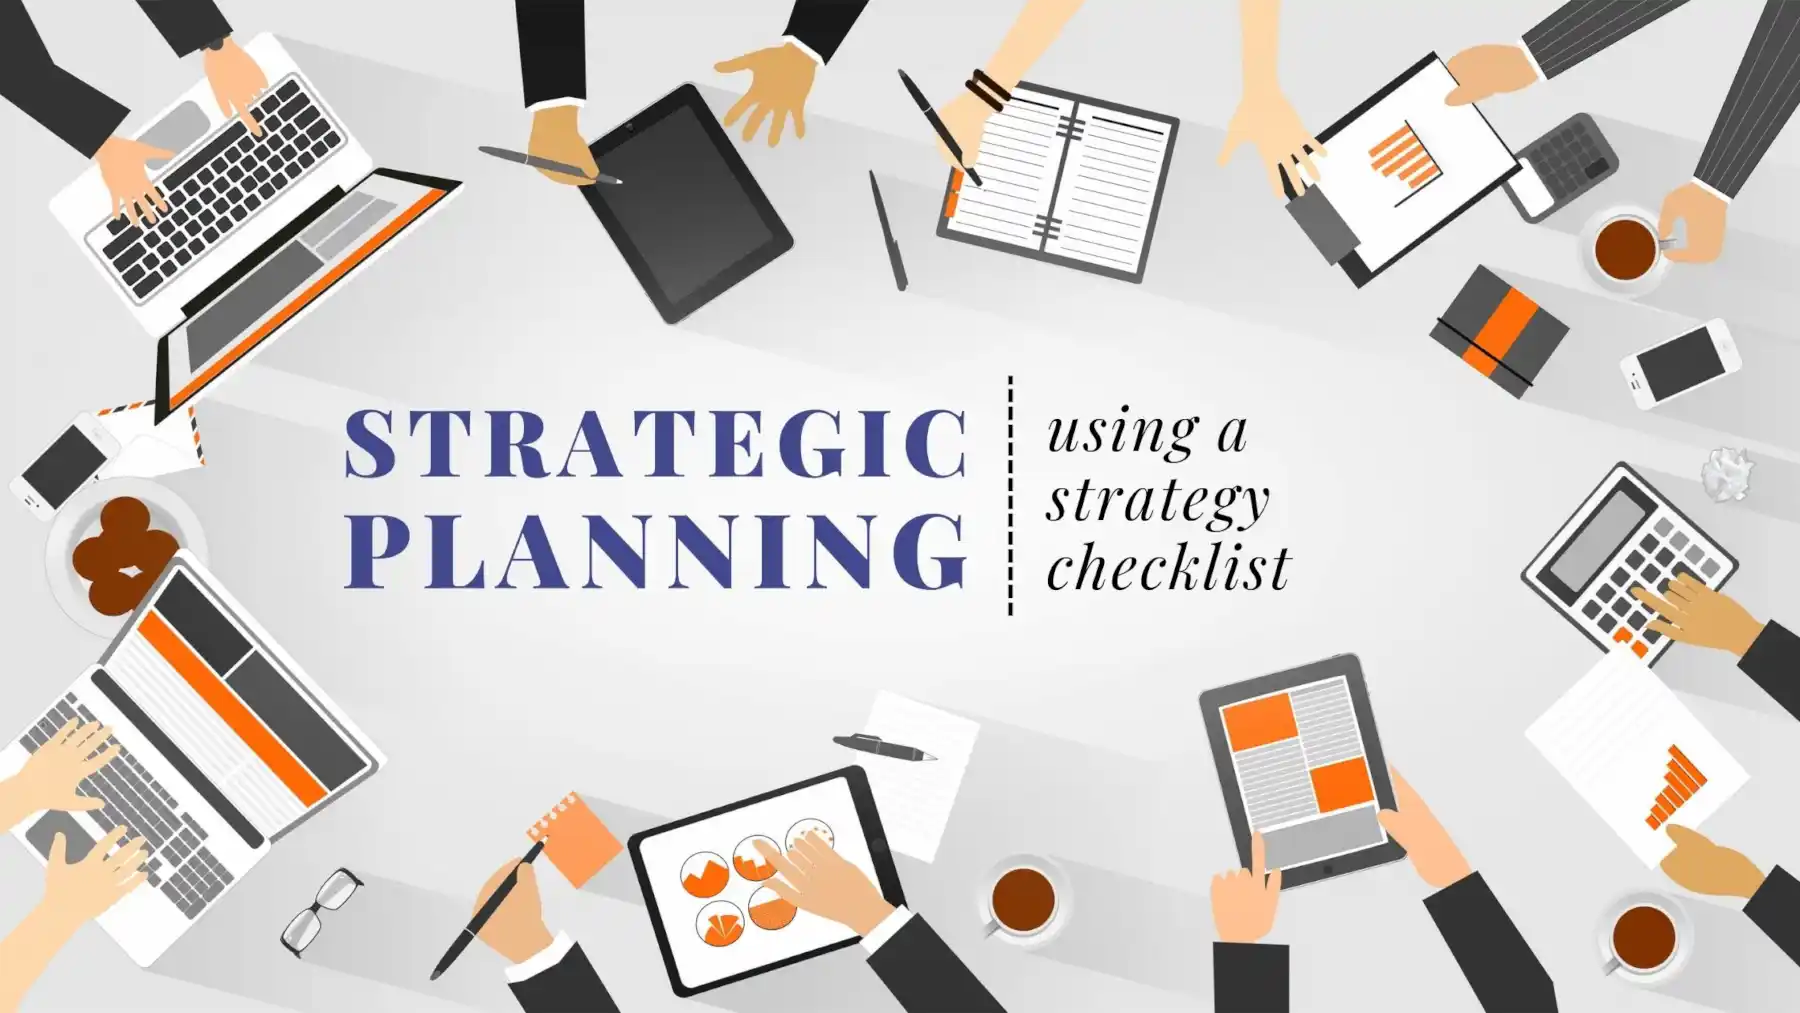 Strategic Planning using a Strategy Checklist